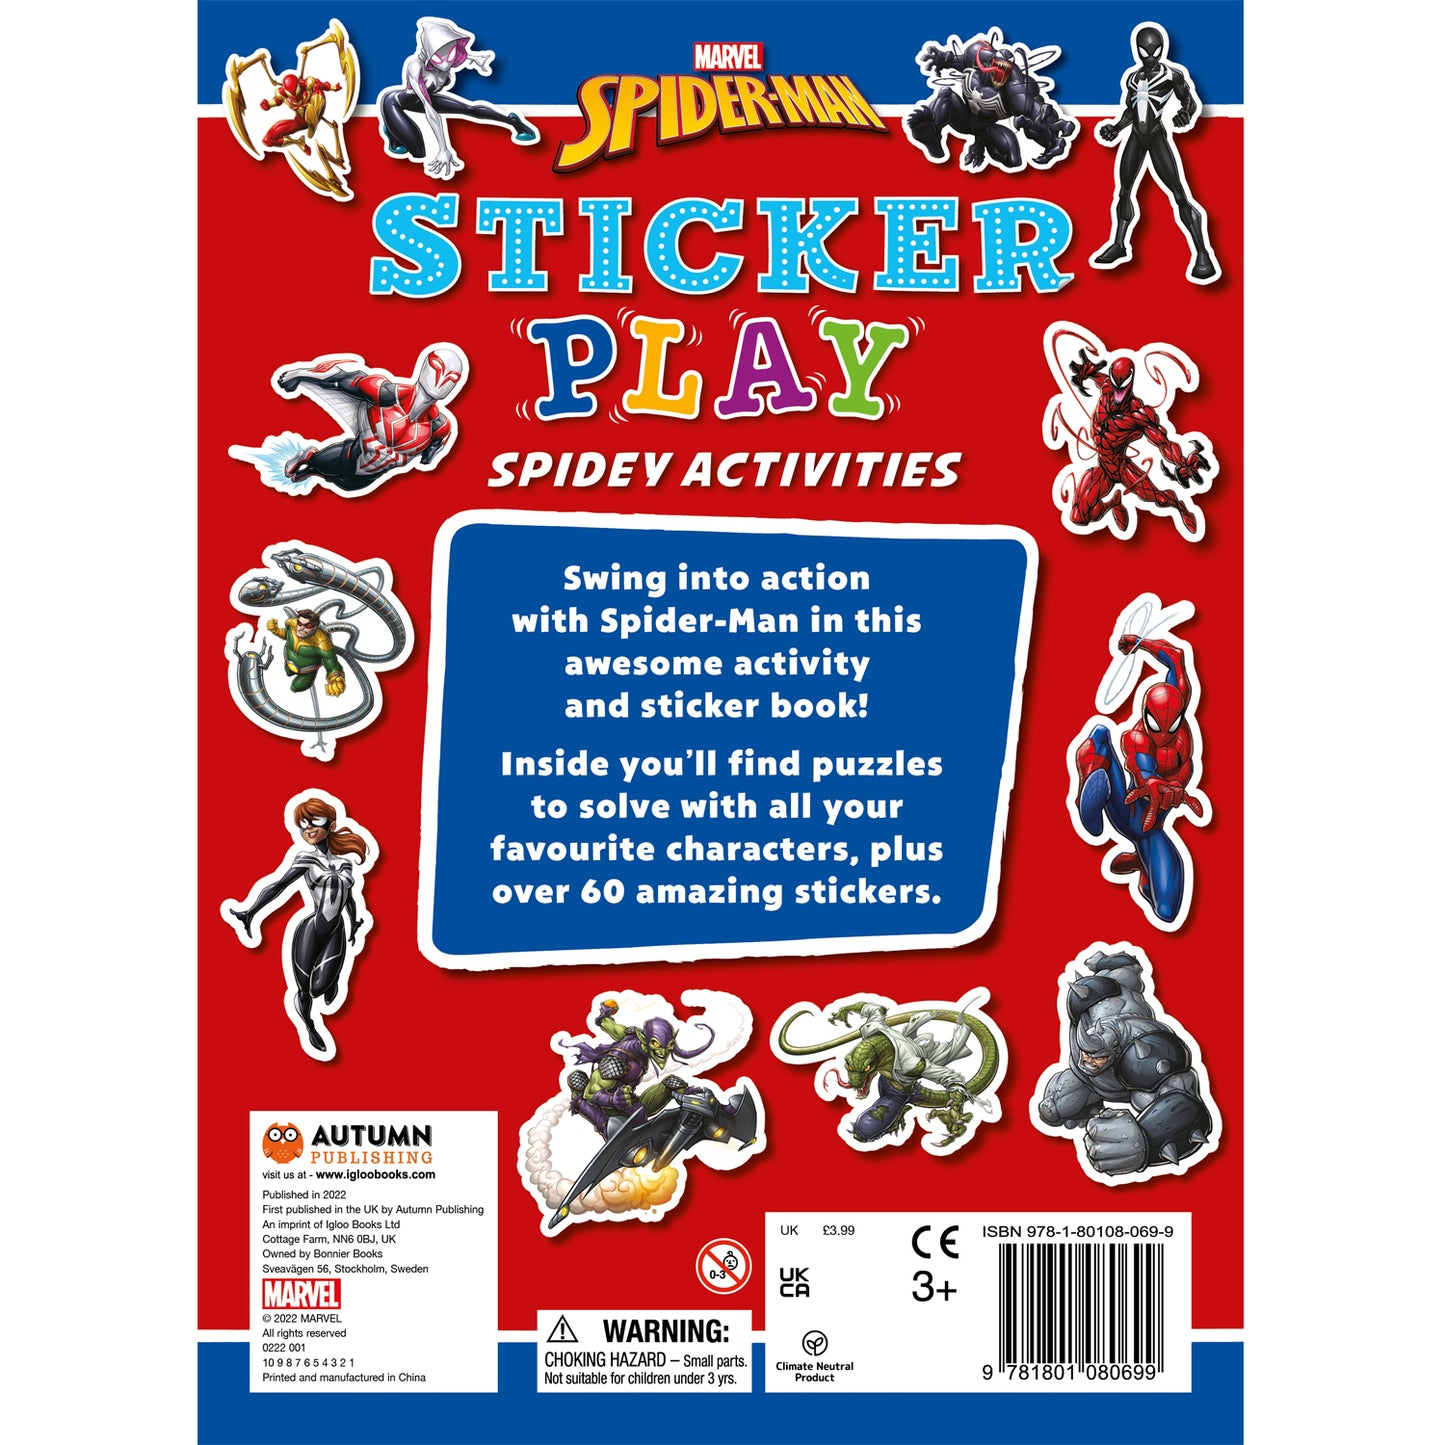 Marvel Spider-Man: Sticker Play Spidey Activities Marvel Entertainment International Ltd